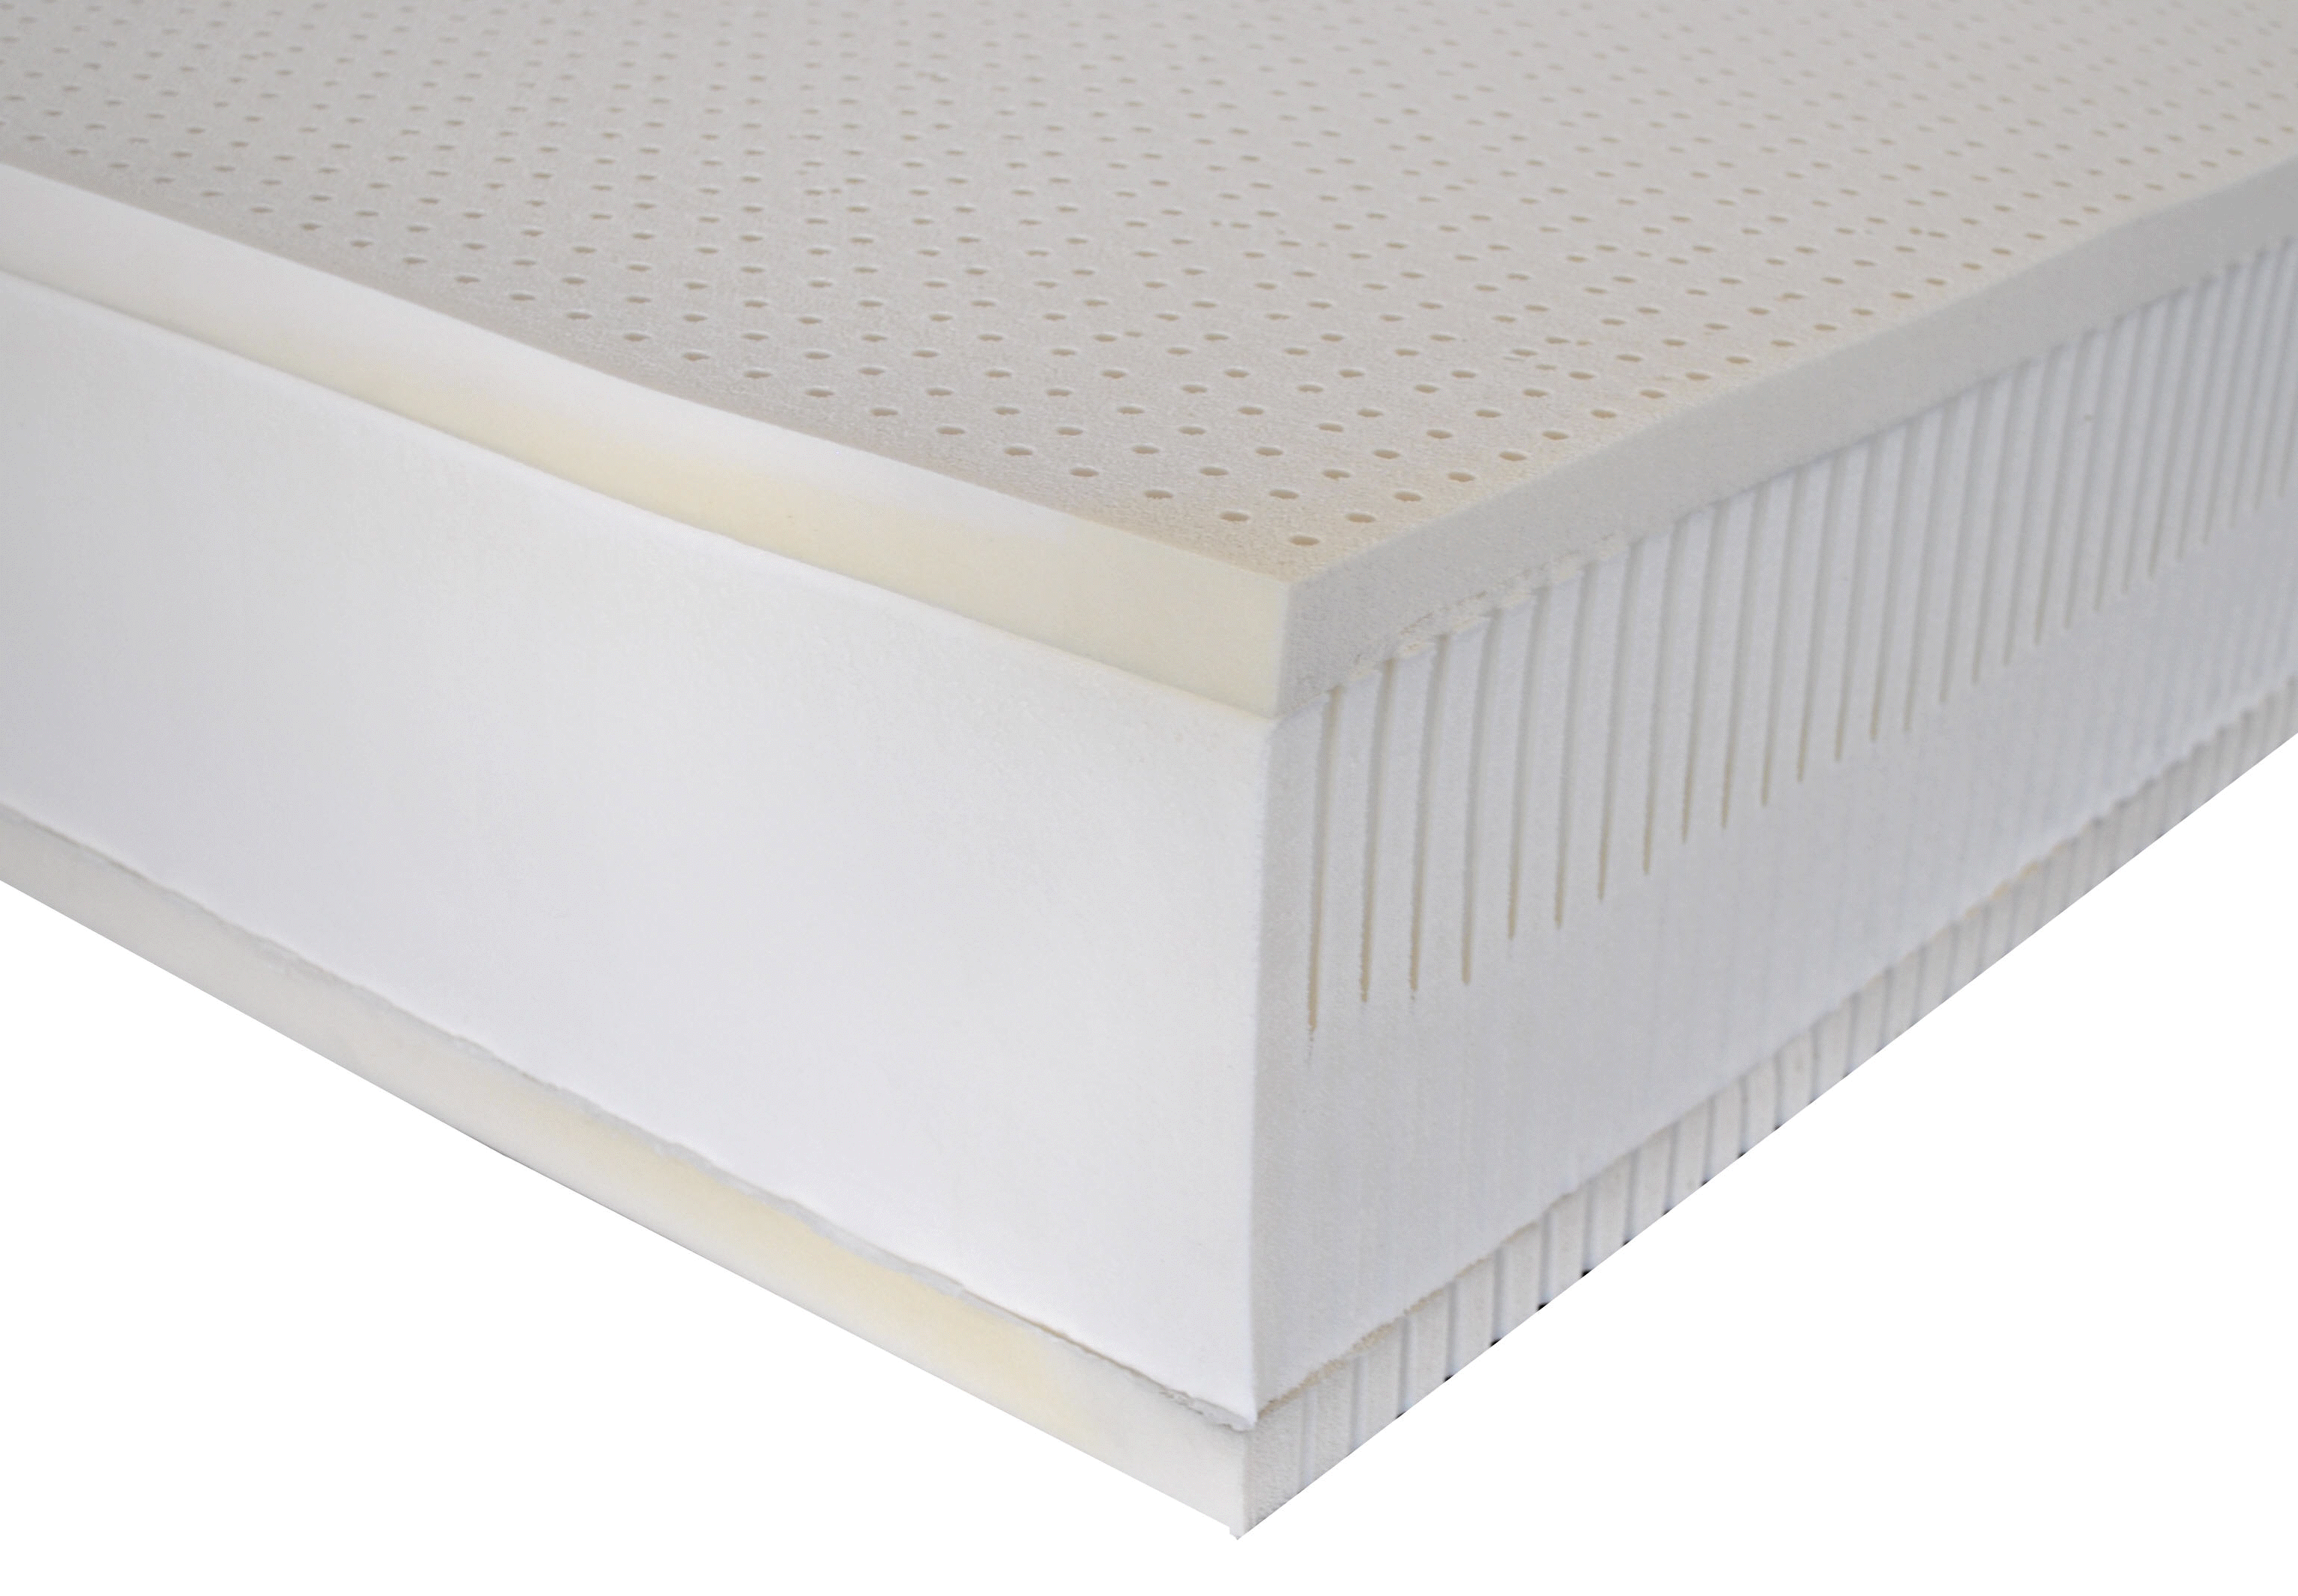 Oakland latex mattress hospital bed